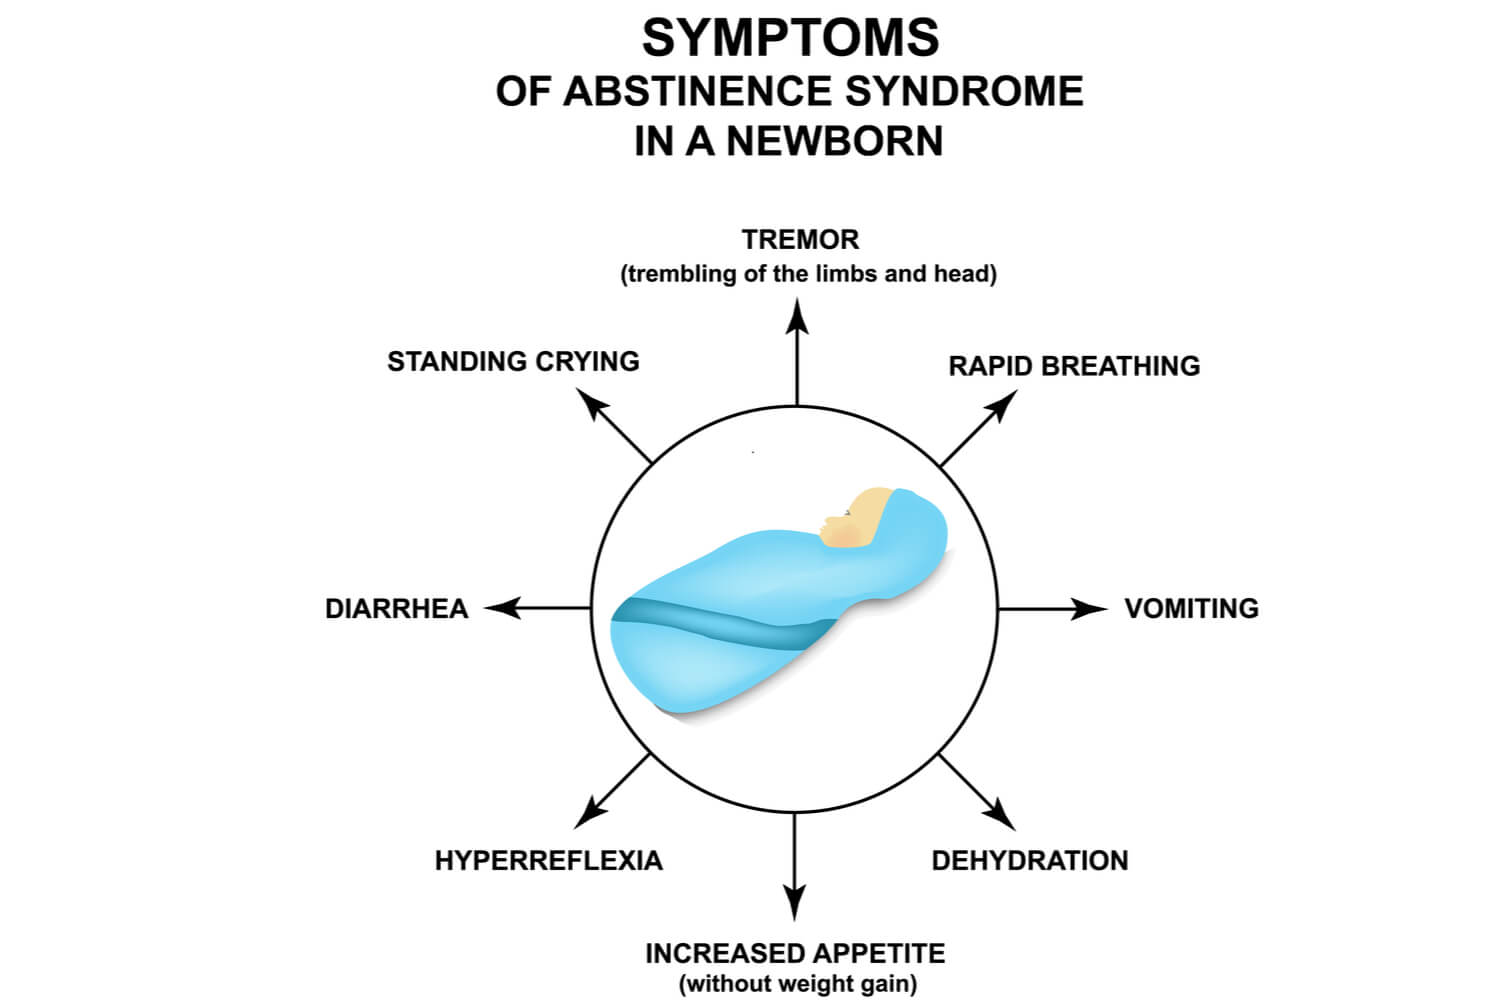 Symptoms of NAS